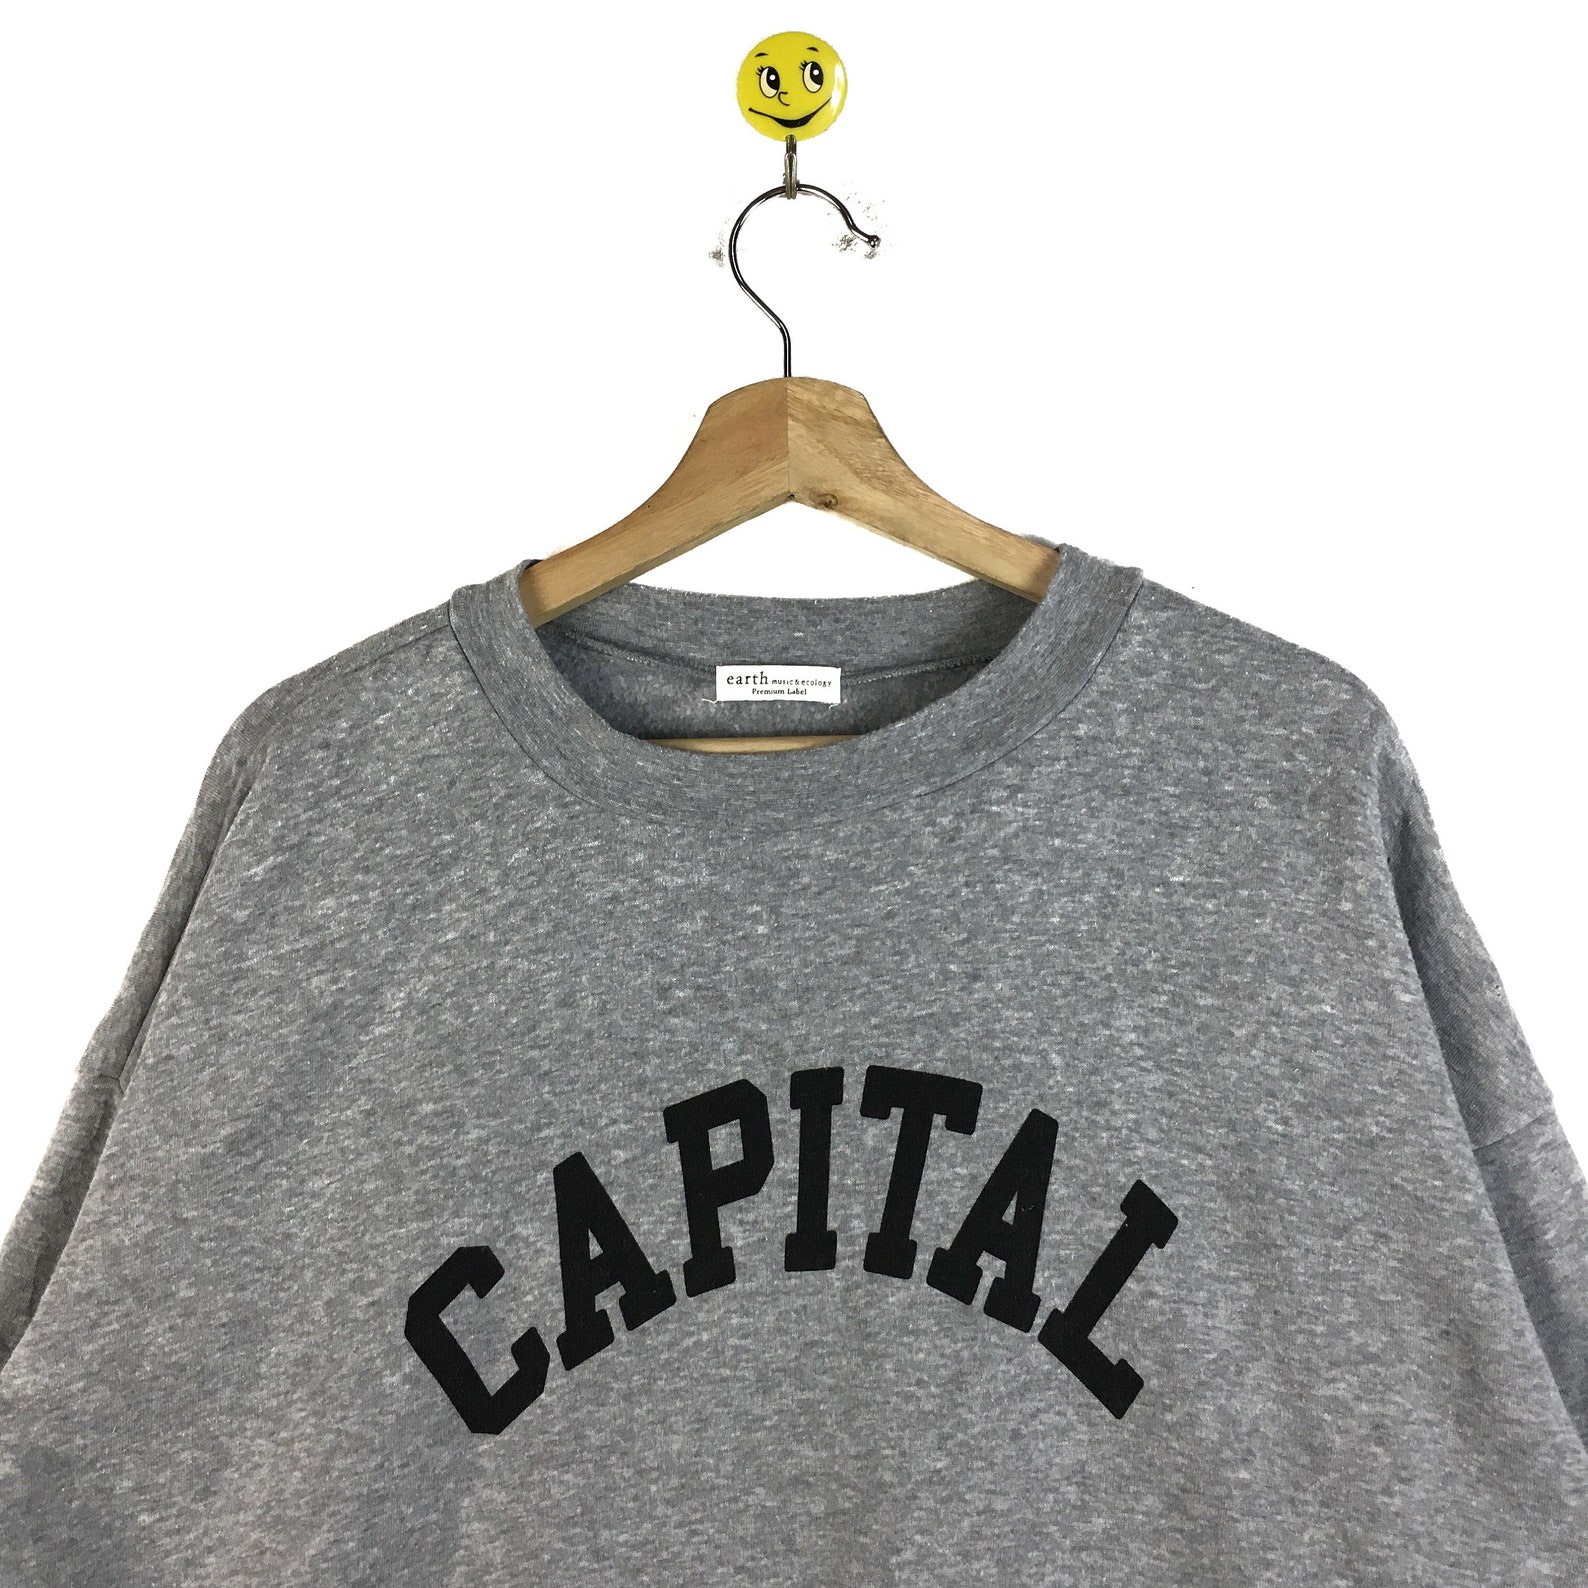 Rare Capital Sweatshirt Capital Pullover Capital Sweater - Etsy